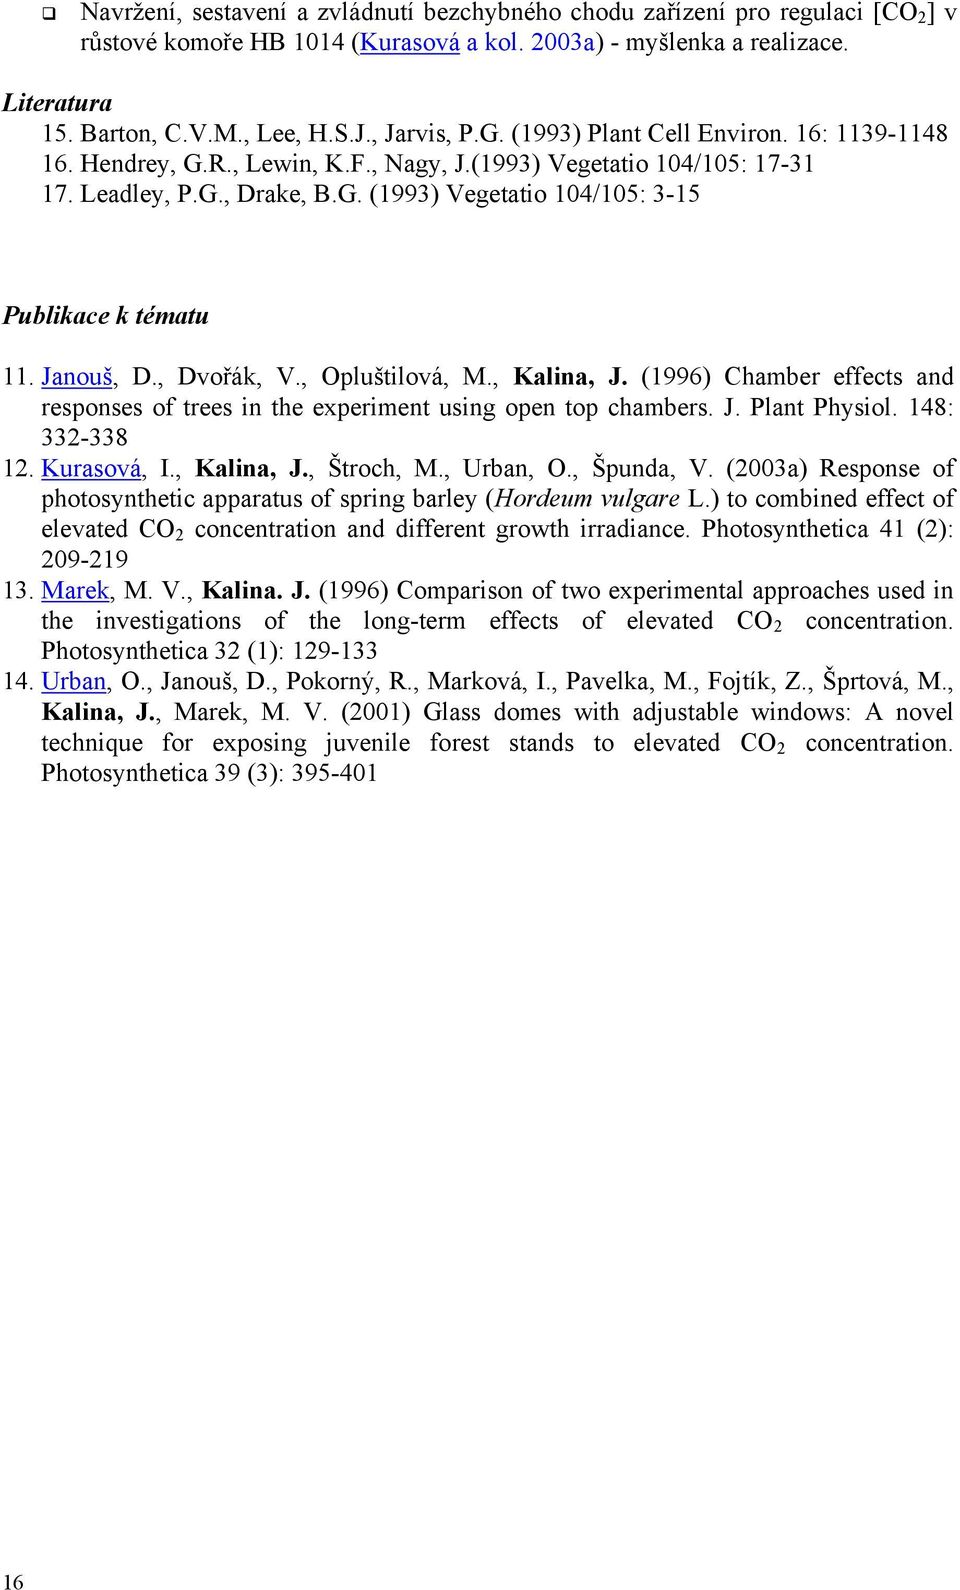 Janouš, D., Dvořák, V., Opluštilová, M., Kalina, J. (1996) Chamber effects and responses of trees in the experiment using open top chambers. J. Plant Physiol. 148: 332-338 12. Kurasová, I., Kalina, J., Štroch, M.